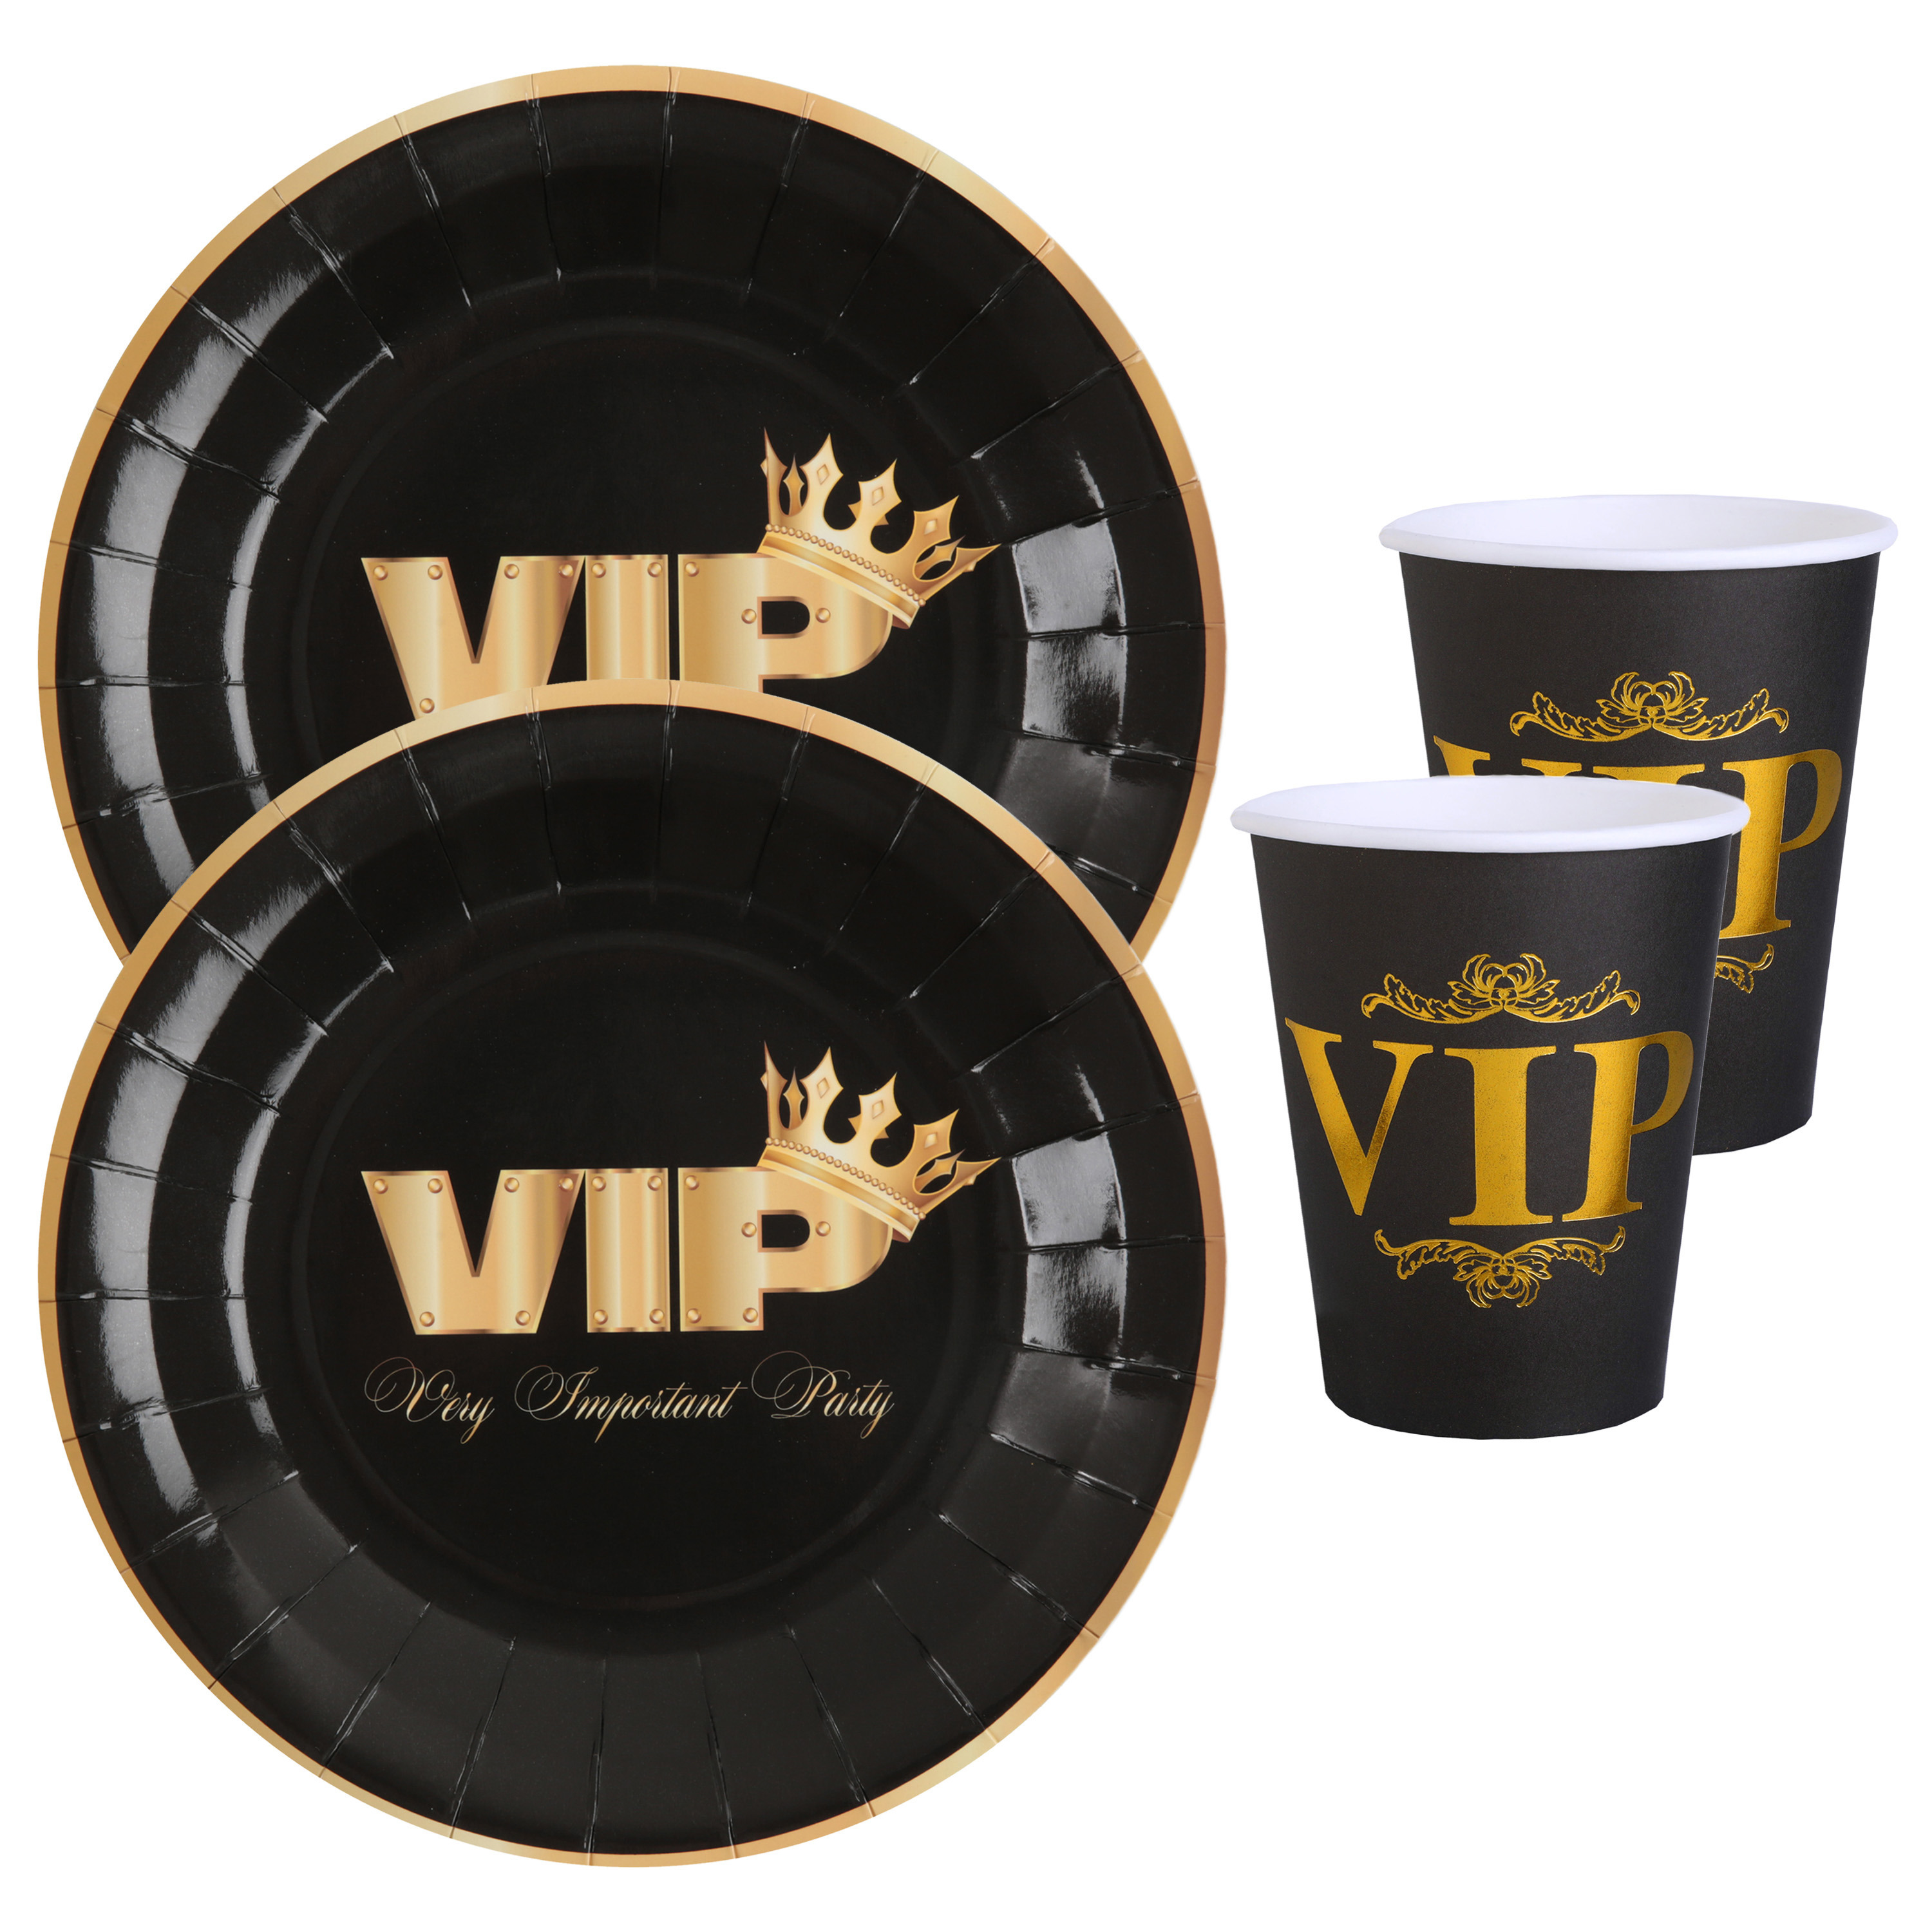 VIP thema feest wegwerp servies set 20x bordjes-20x bekers zwart-goud